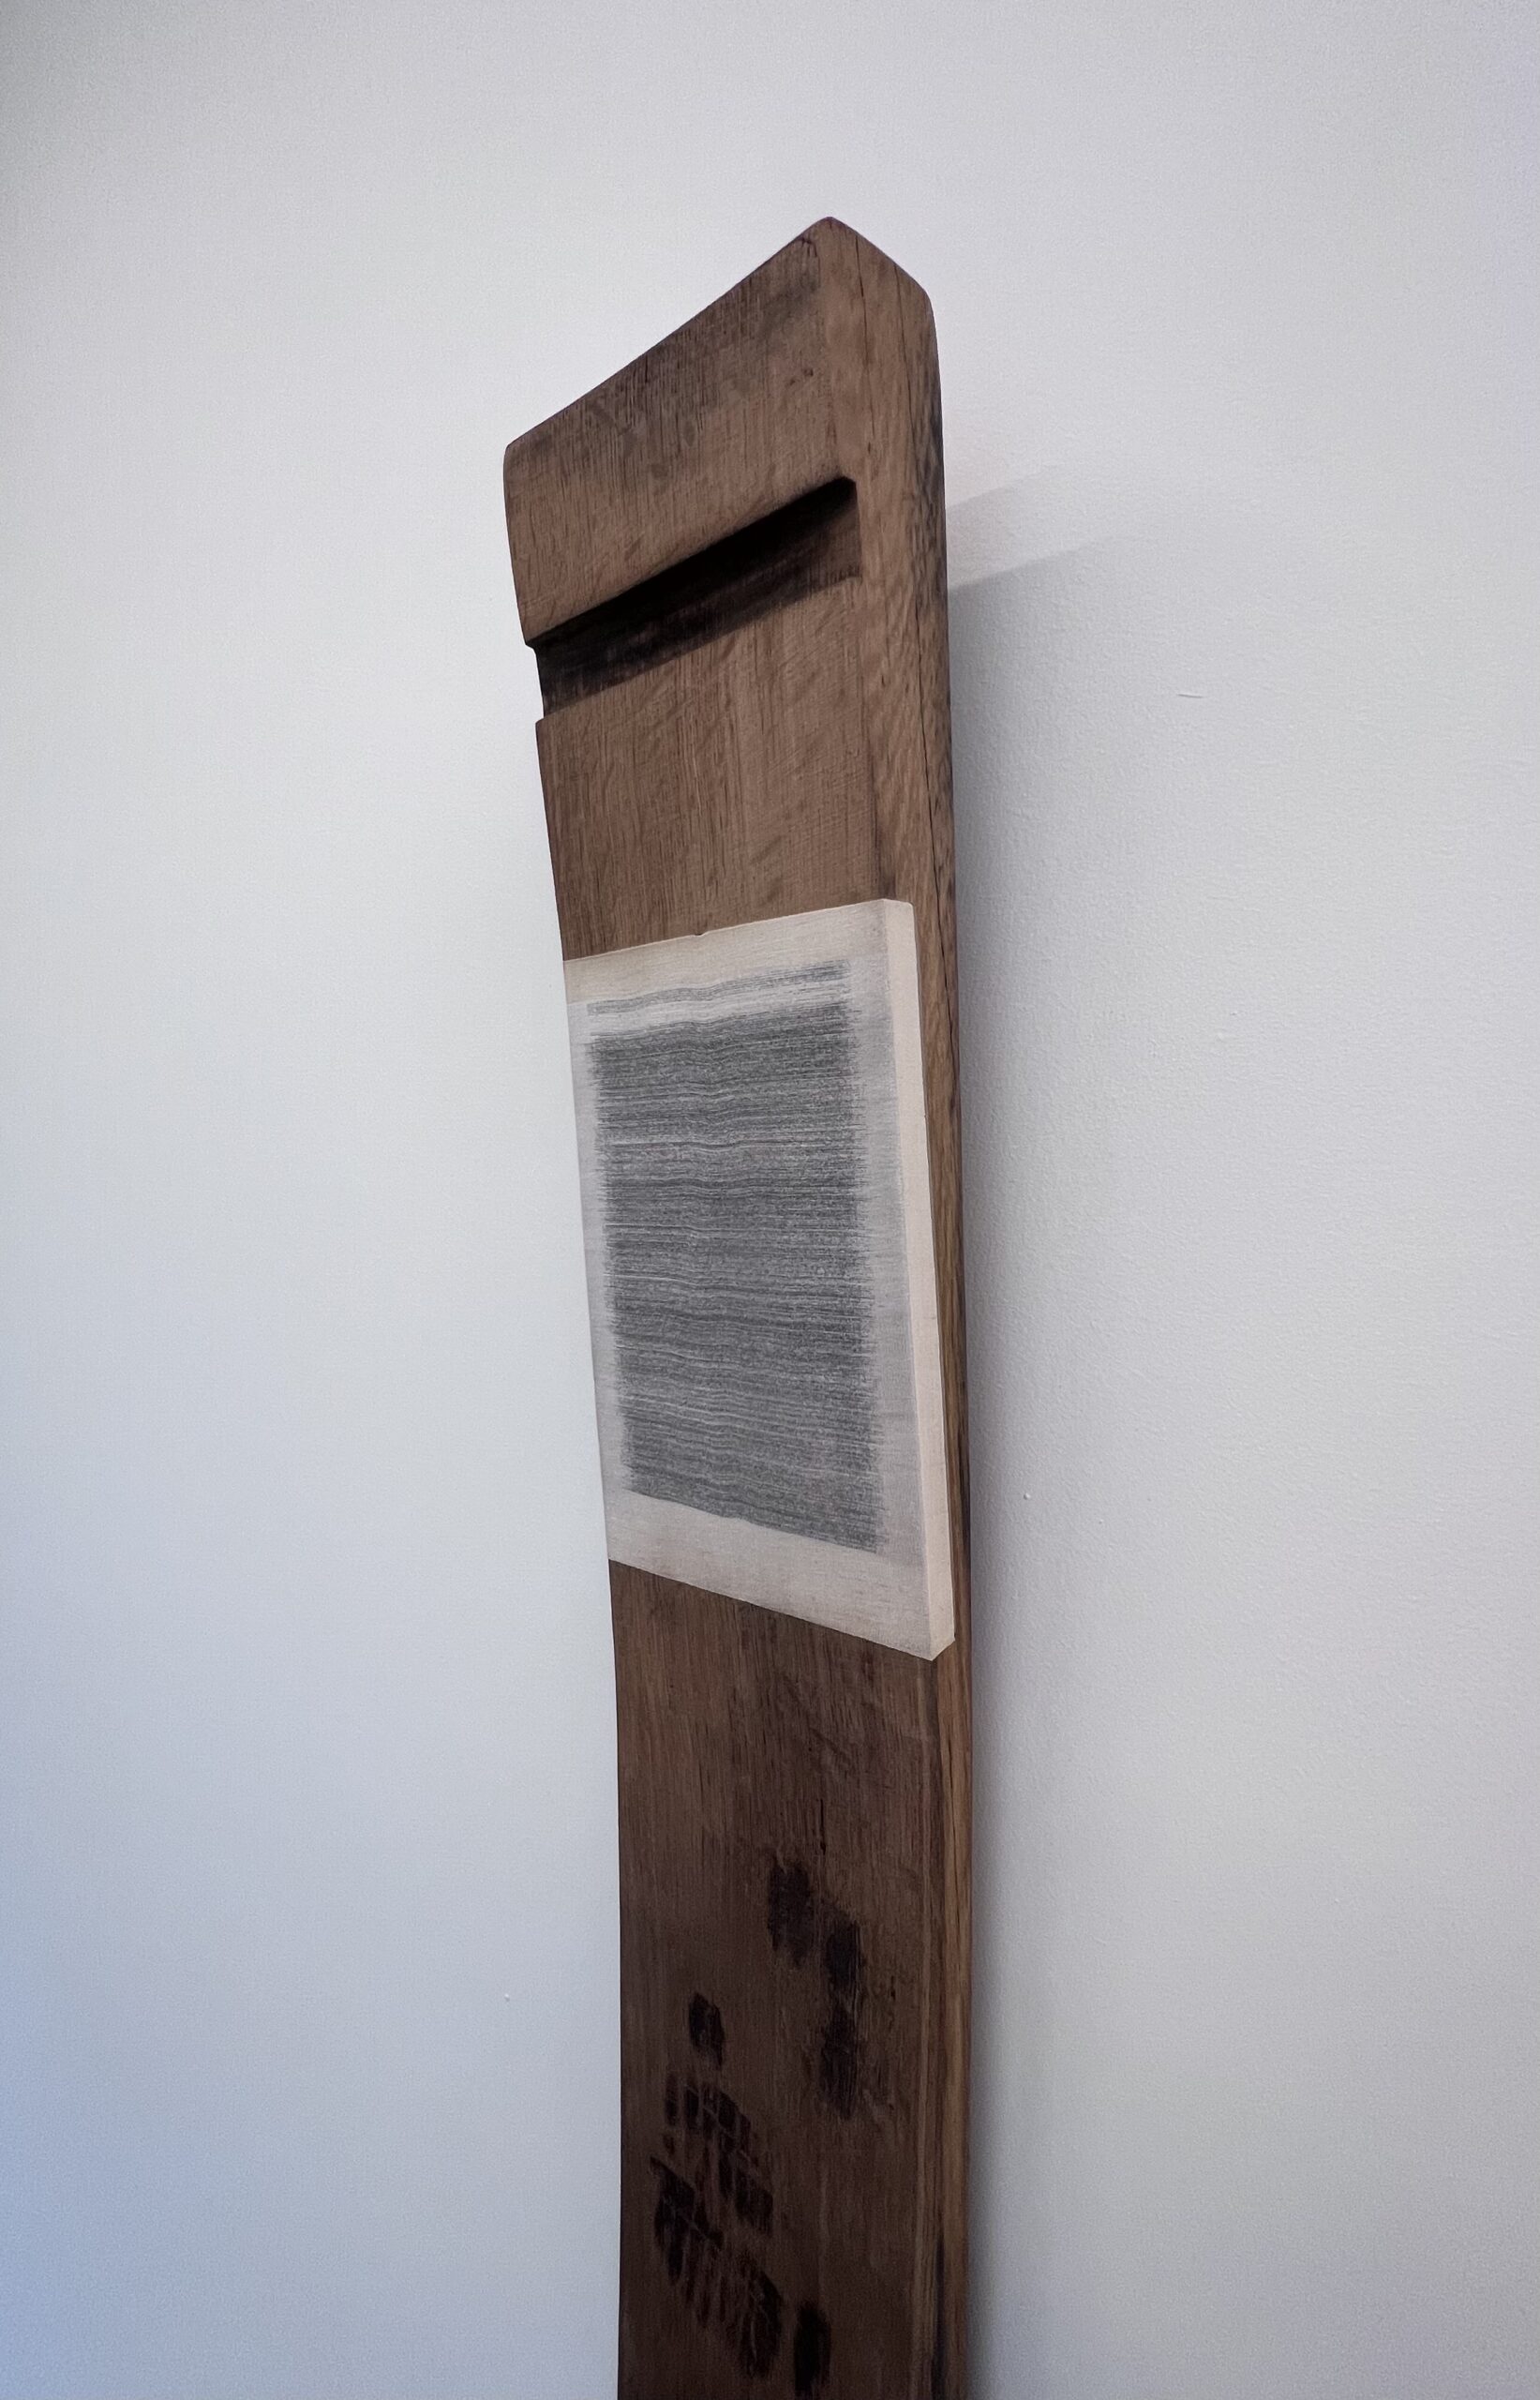 Denmark - dead letters, horizontally cut book embedded in wine wood